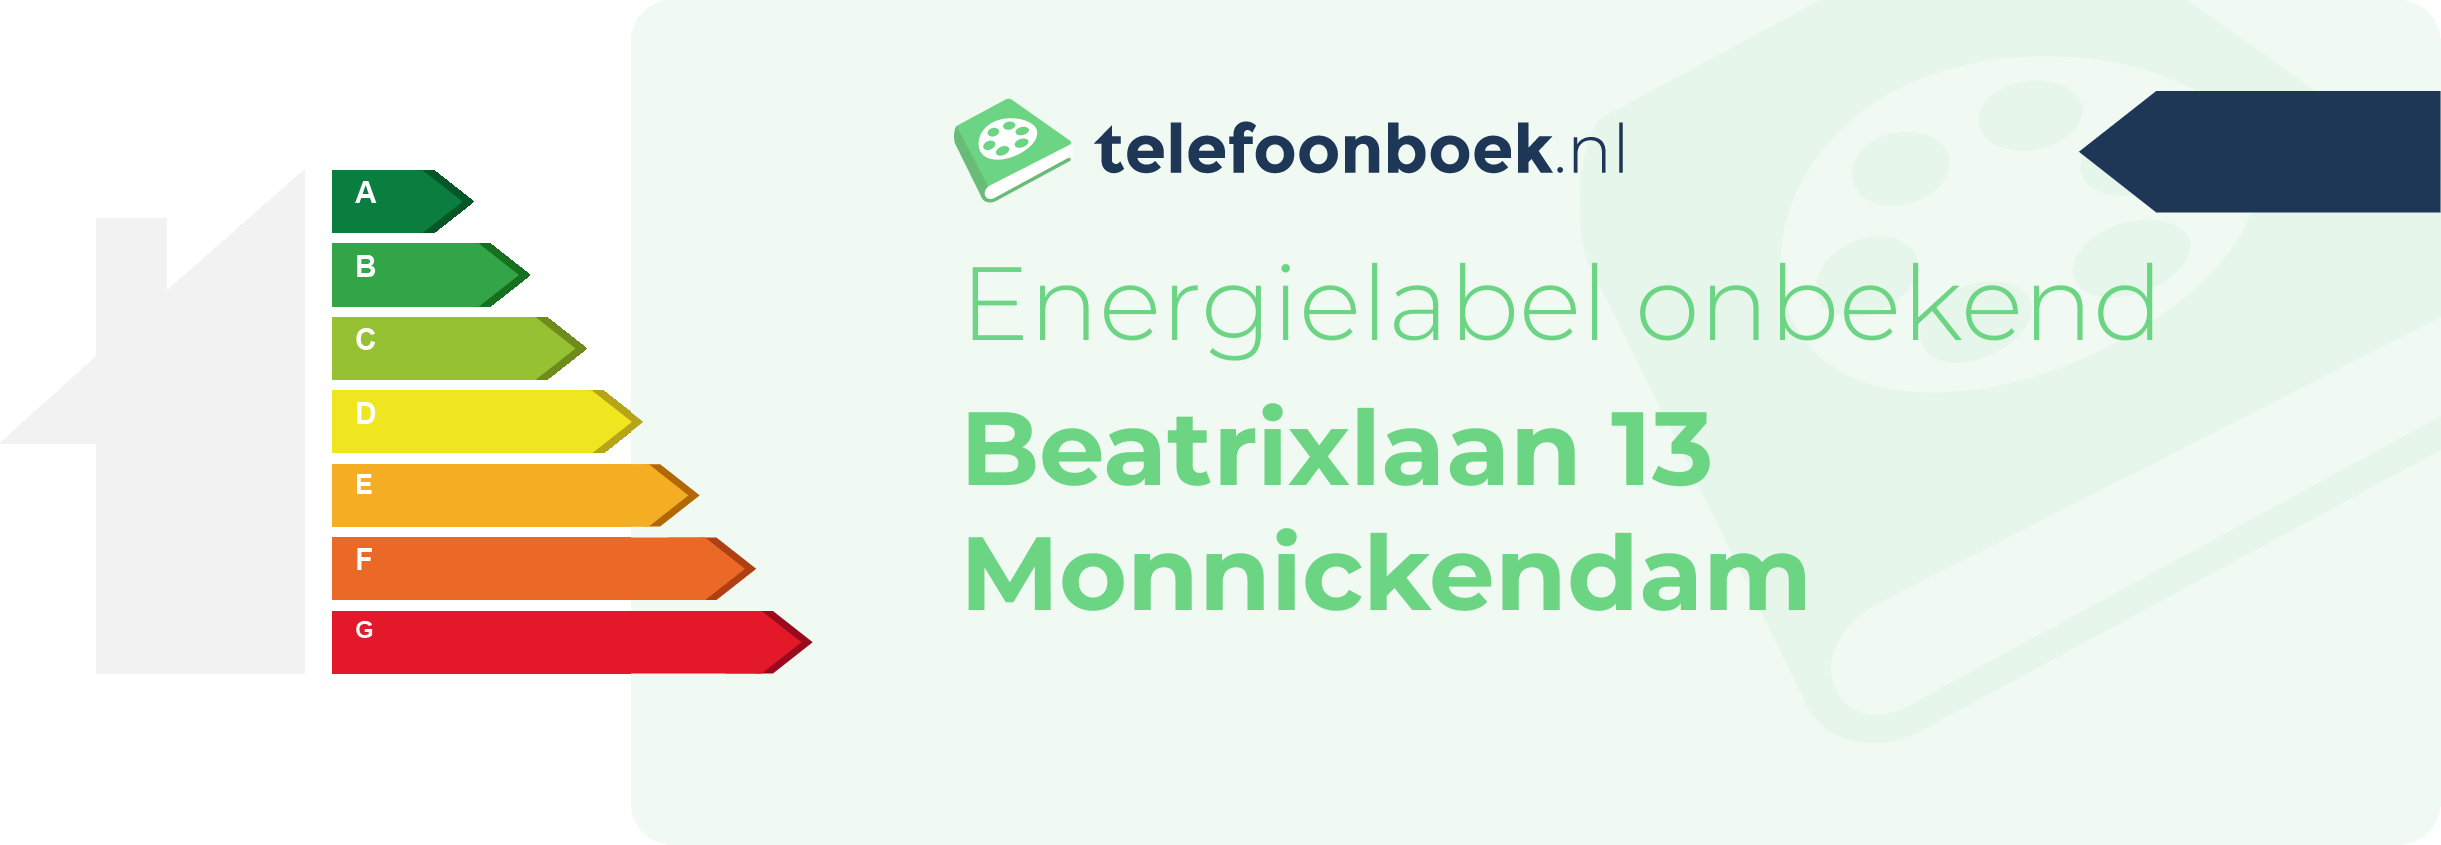 Energielabel Beatrixlaan 13 Monnickendam